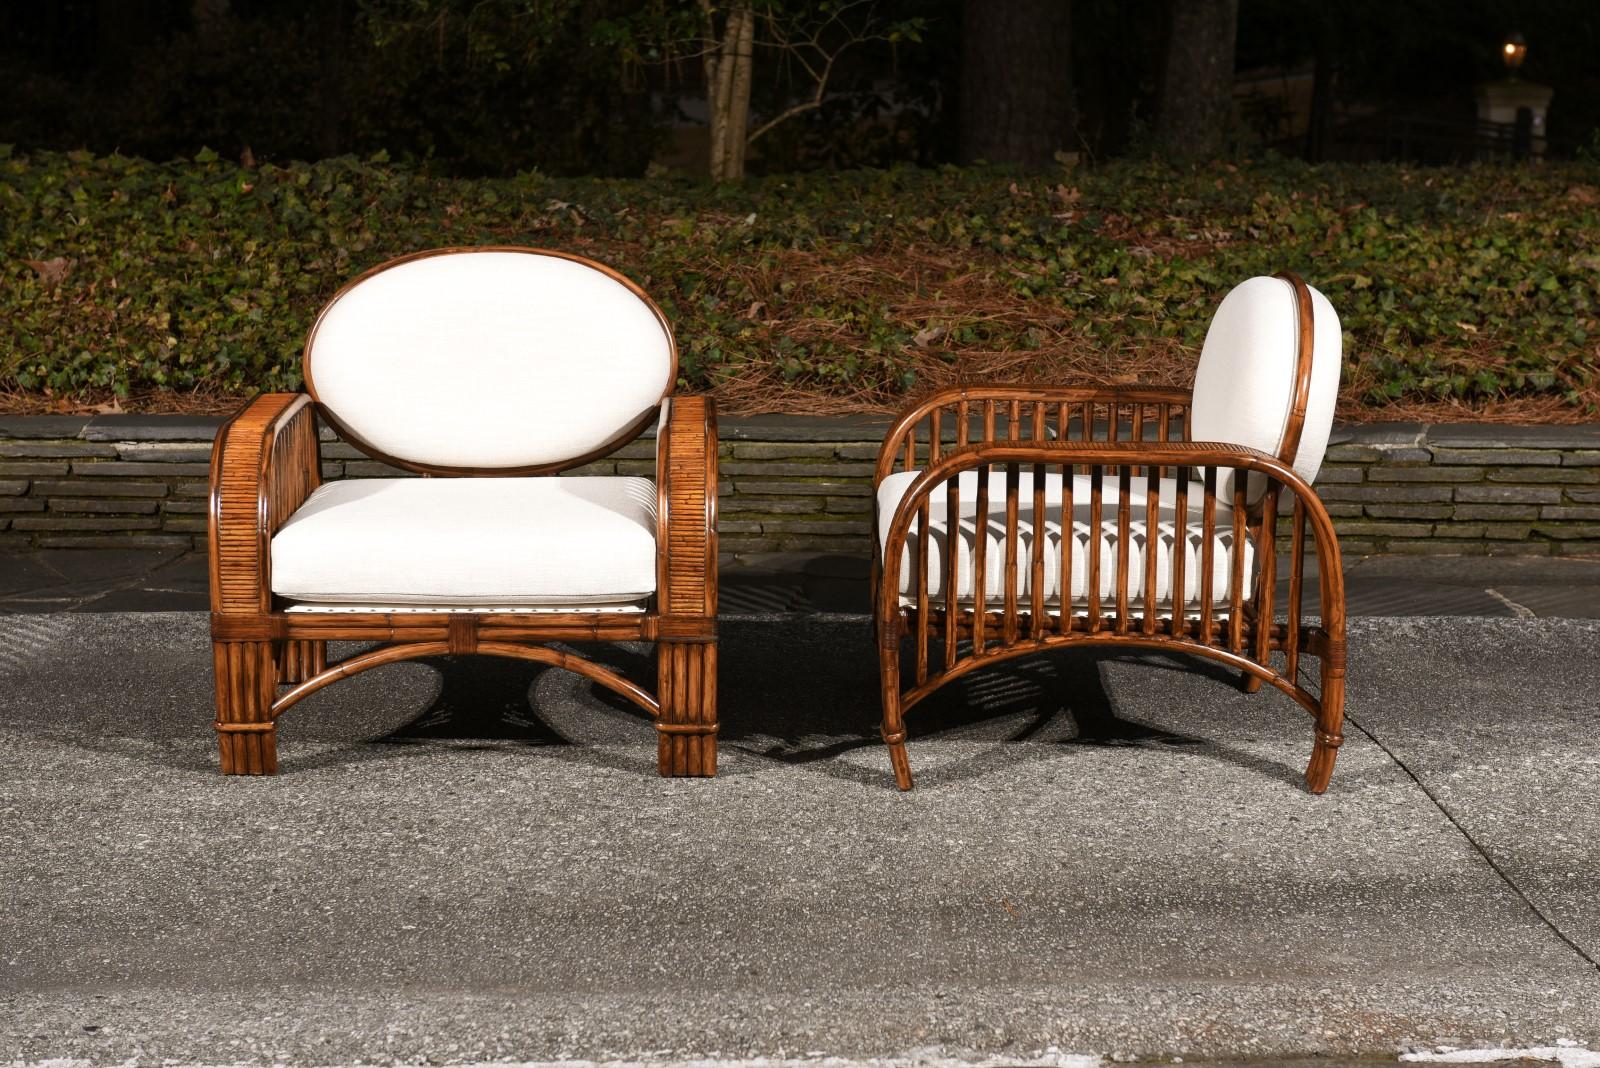 Striking Pair of Art Deco Influenced Club Chairs by Brown Jordan, circa 1980 For Sale 6